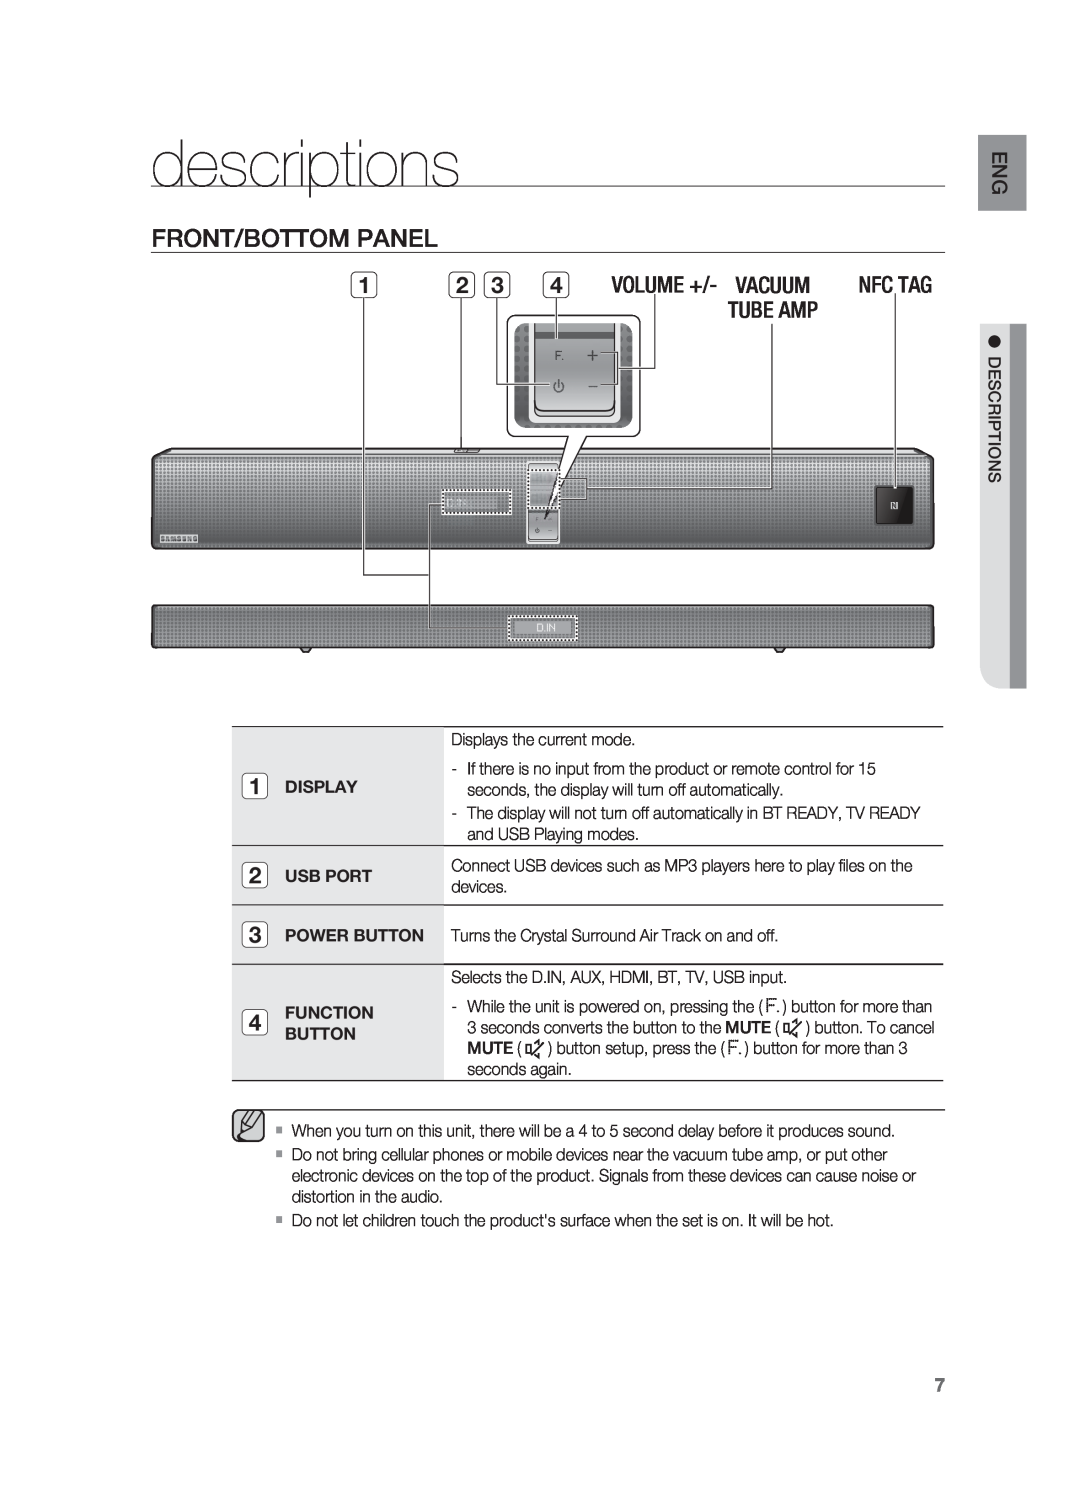 Samsung HW-F850/ZA user manual descriptions, Front/Bottom Panel, Volume +/- Vacuum, Tube Amp 